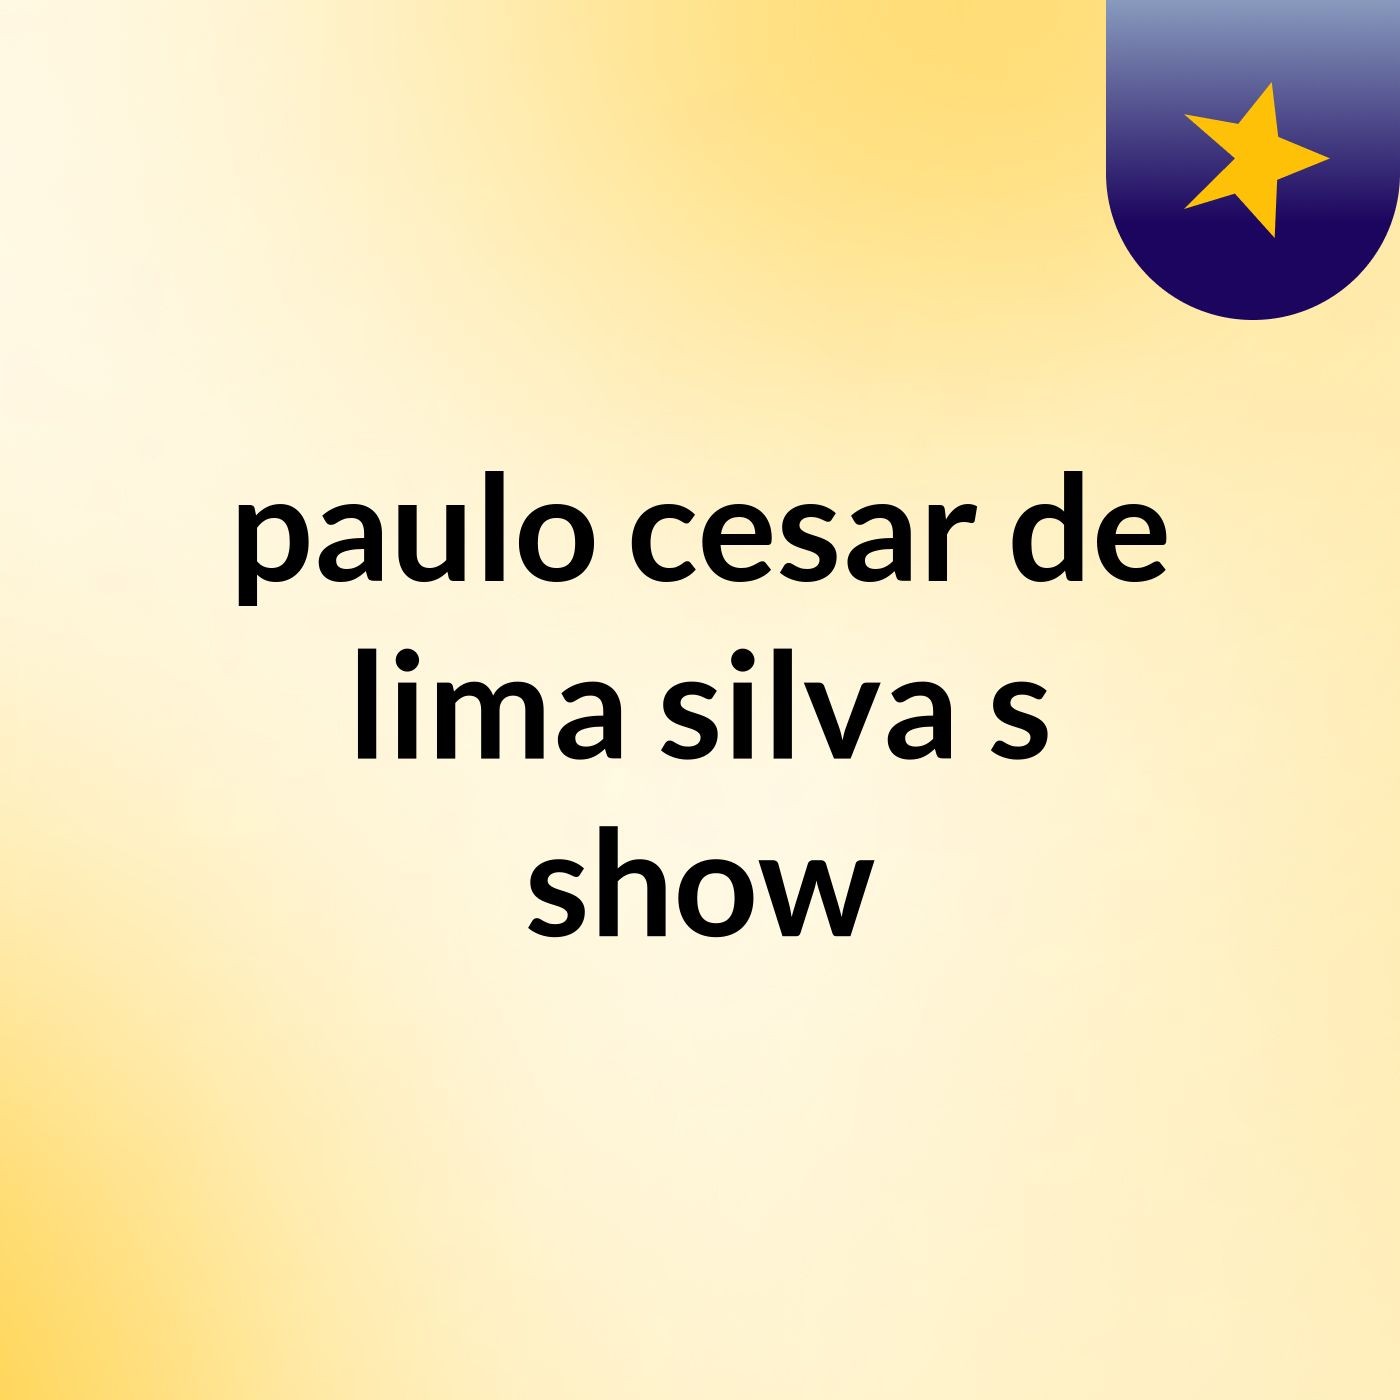 Episódio 7 - paulo cesar de lima silva's show